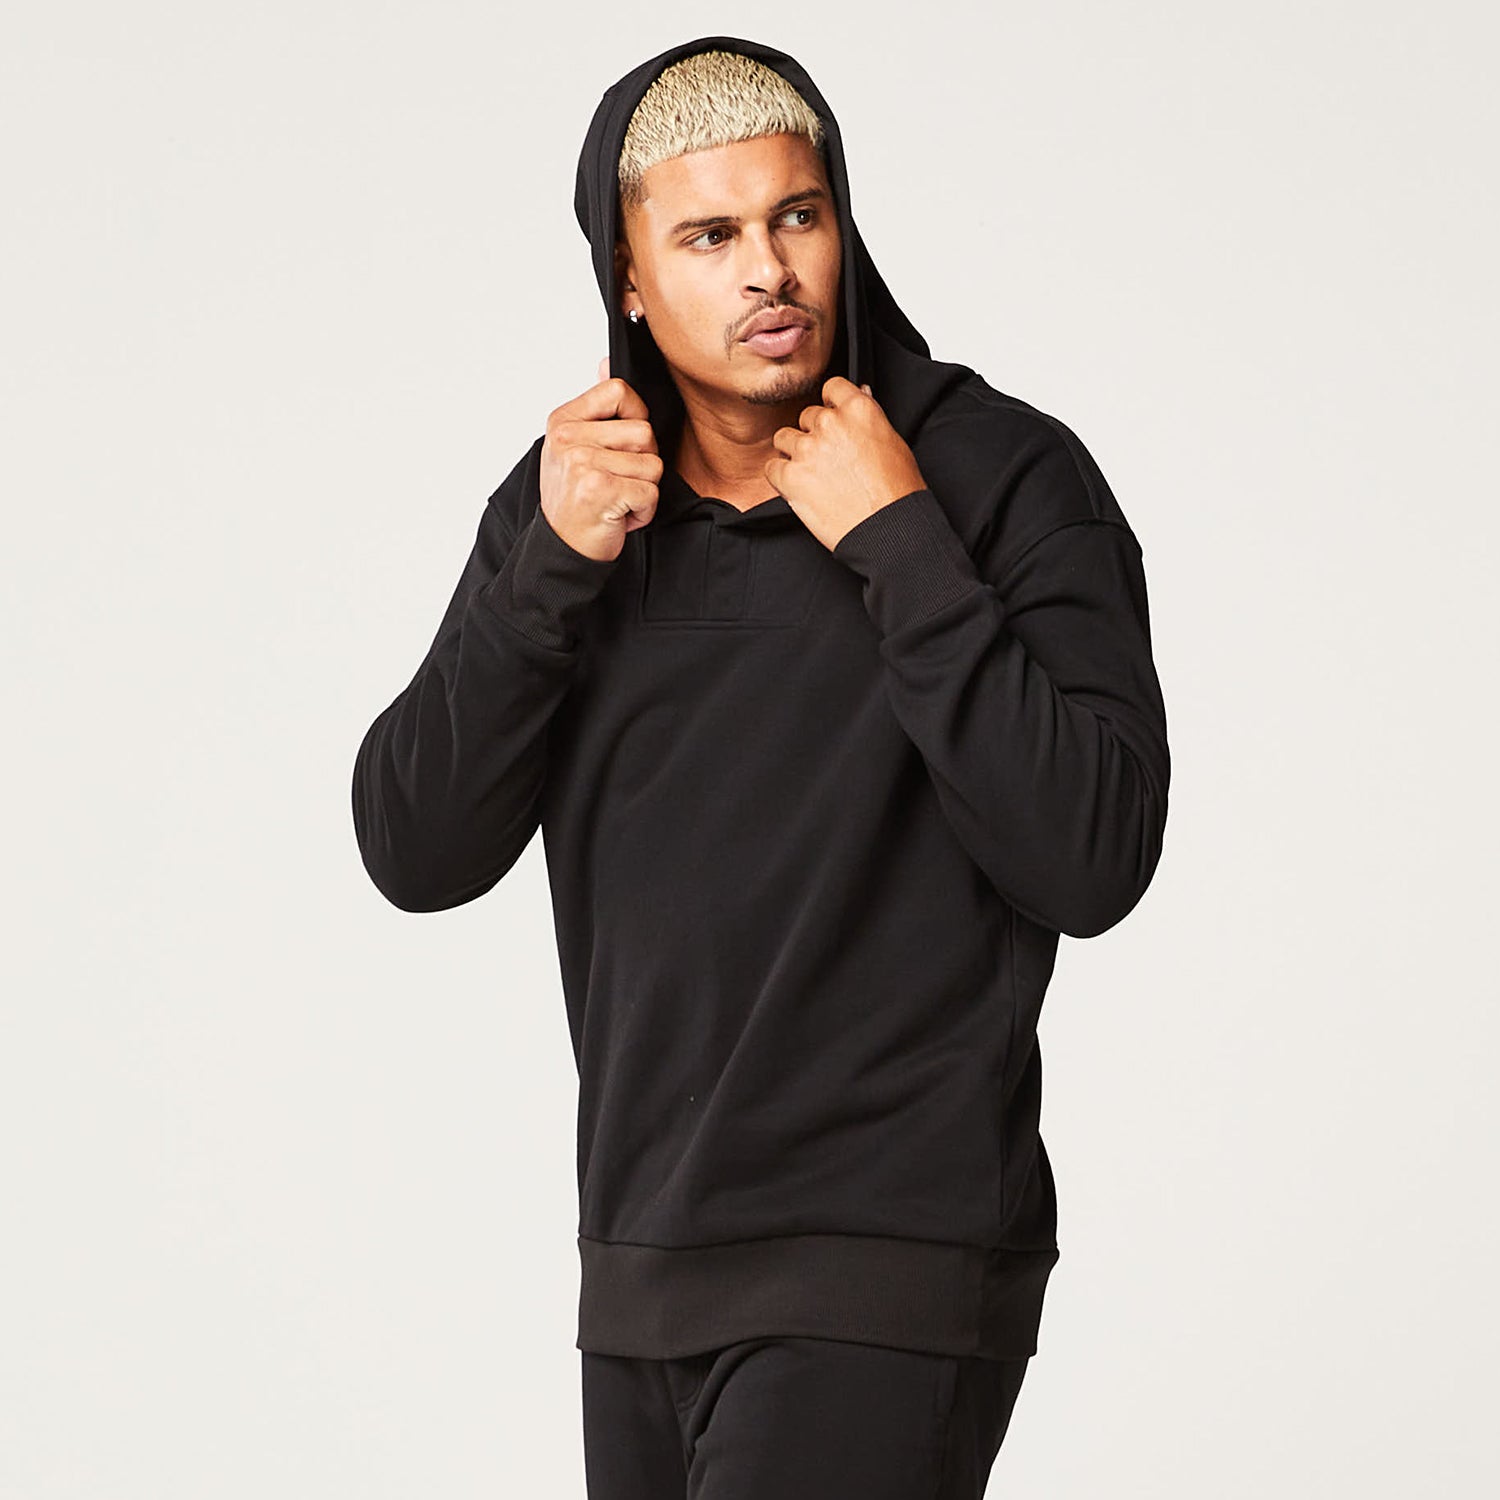 squatwolf-gym-wear-code-urban-hoodie-black-workout-hoodies-for-men